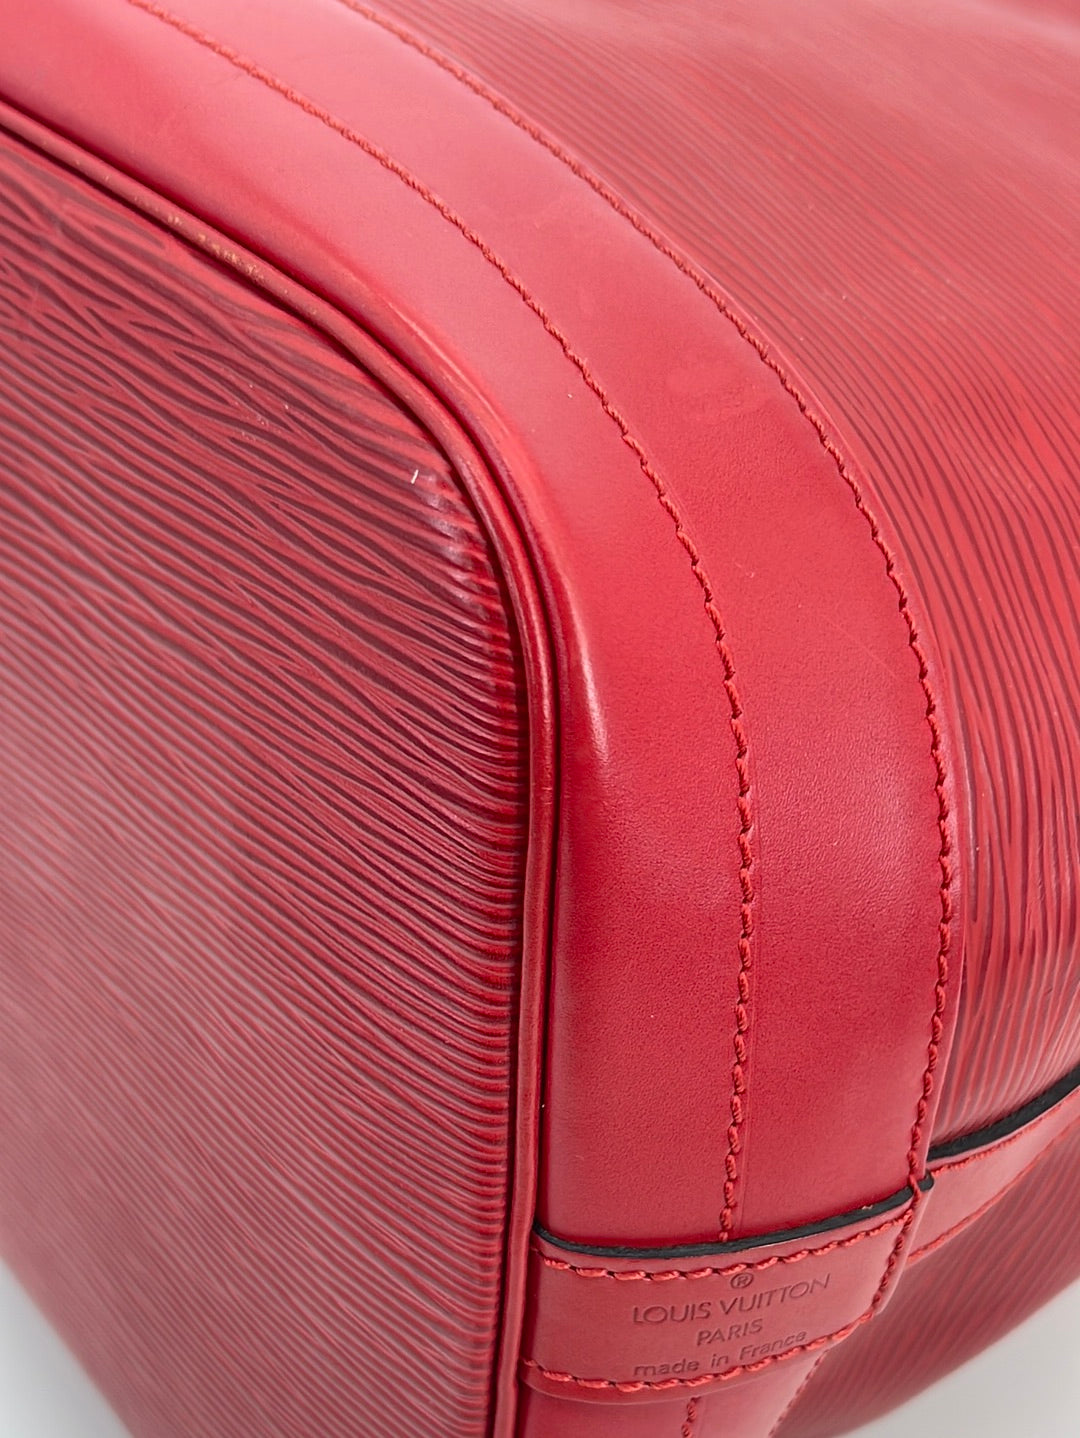 Louis Vuitton Pink Epi Leather Nano Noe (Authentic Pre-Owned) - ShopStyle  Satchels & Top Handle Bags